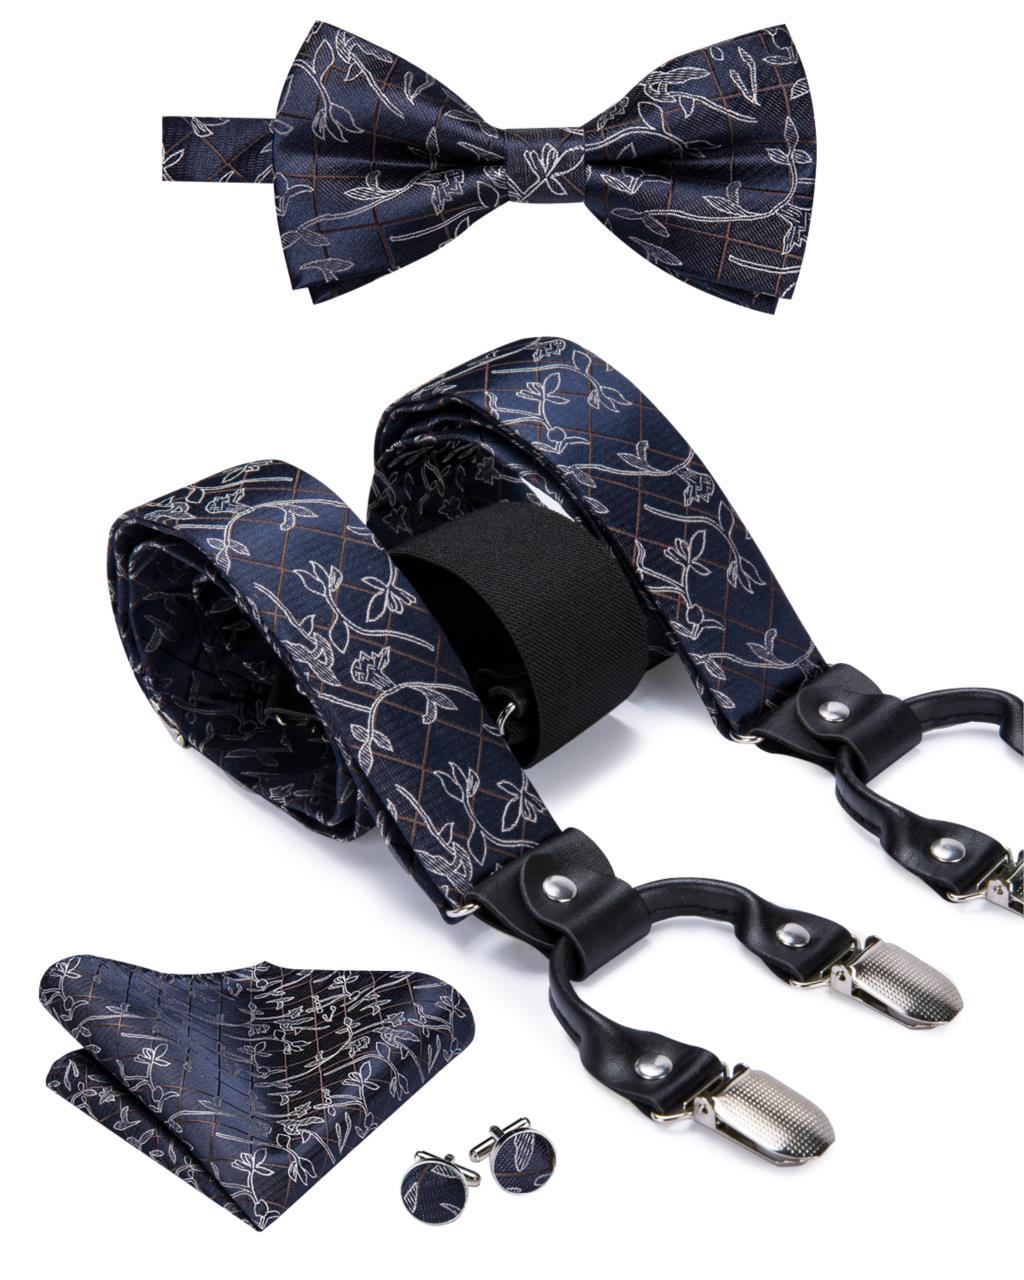 Williams Complete Suit Silk Accessory Set GR Floral Navy Blue 